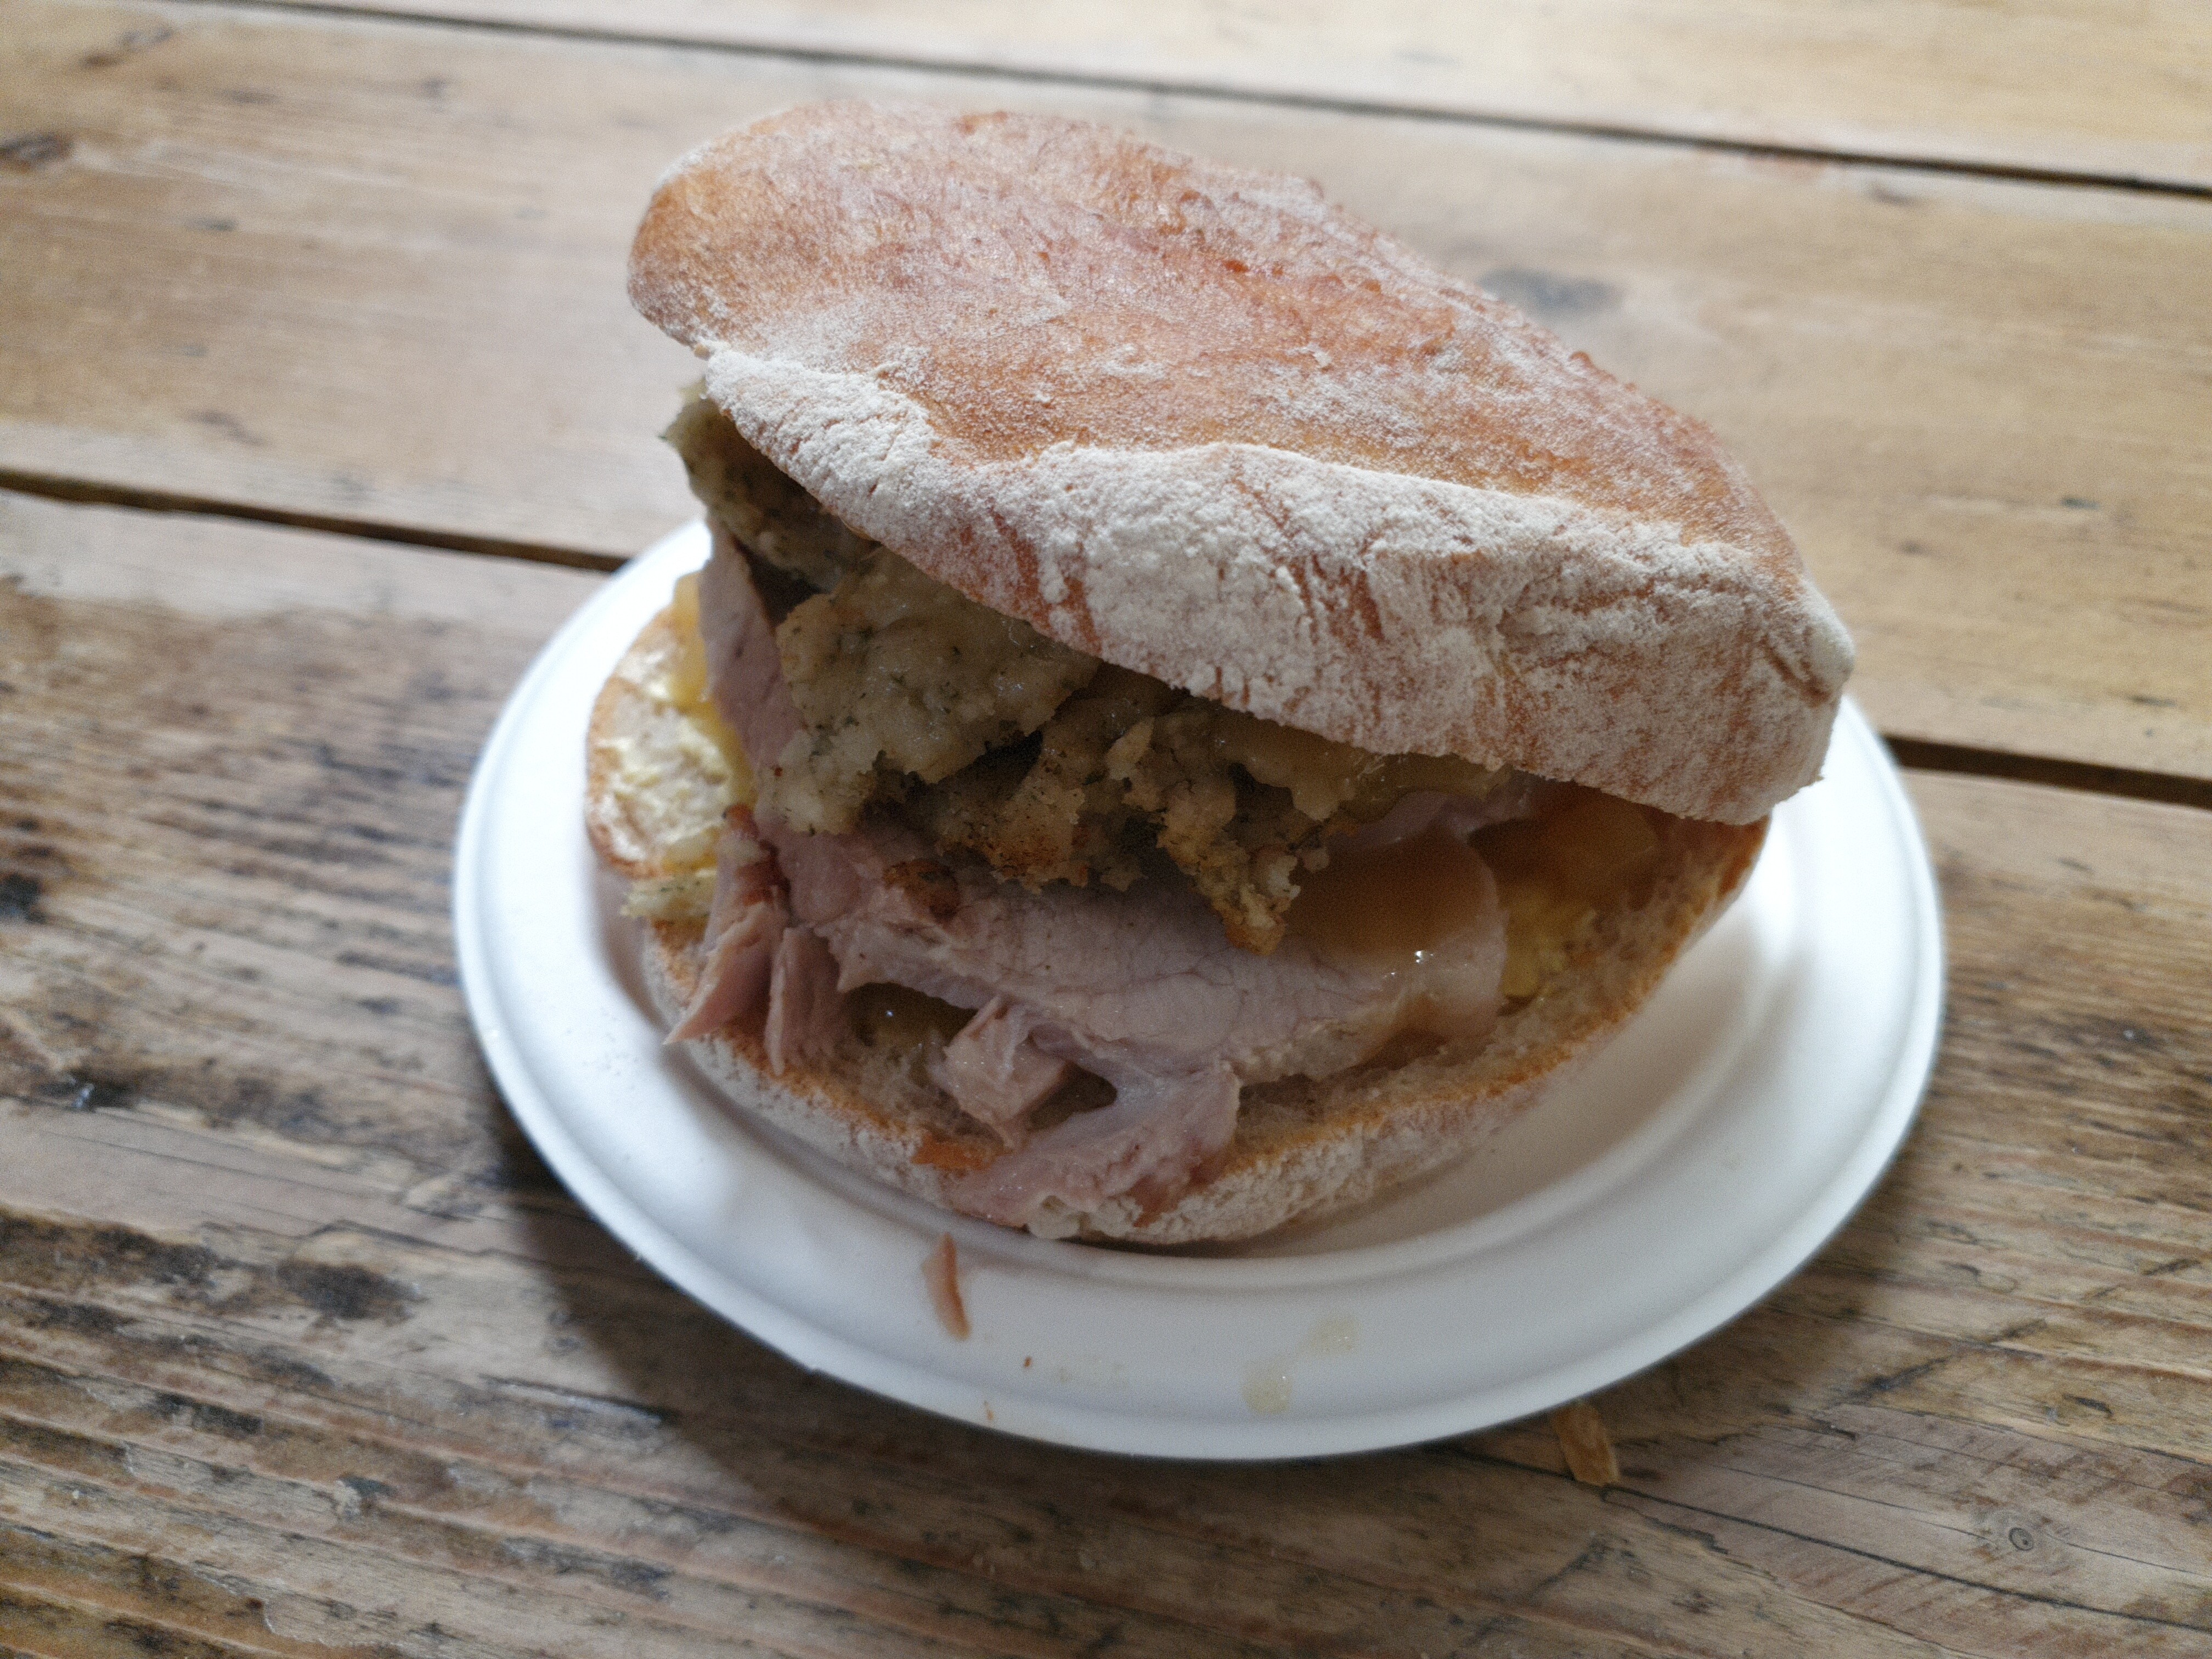 A roast pork sandwich